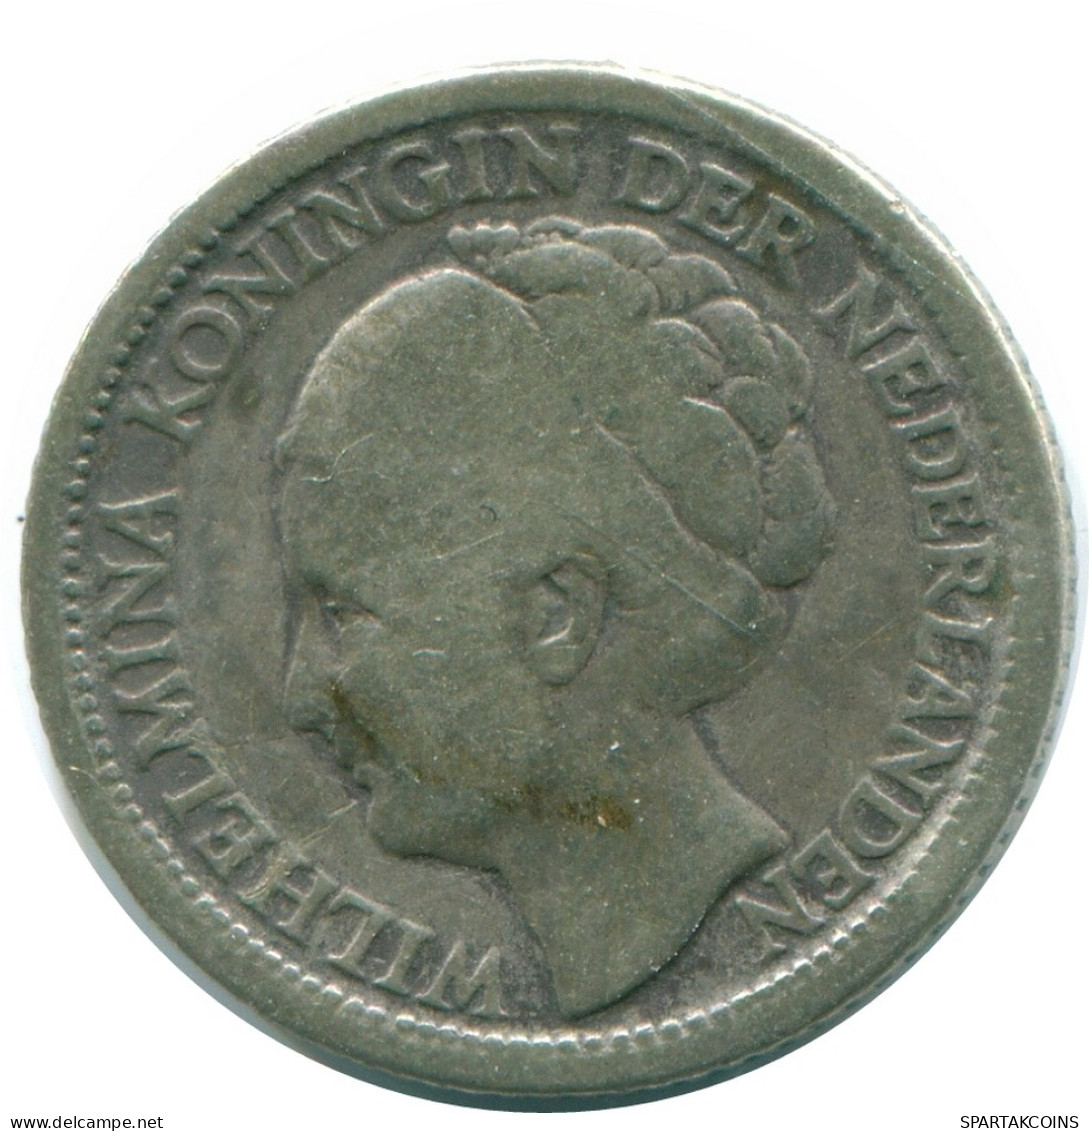 1/4 GULDEN 1944 CURACAO Netherlands SILVER Colonial Coin #NL10608.4.U - Curacao